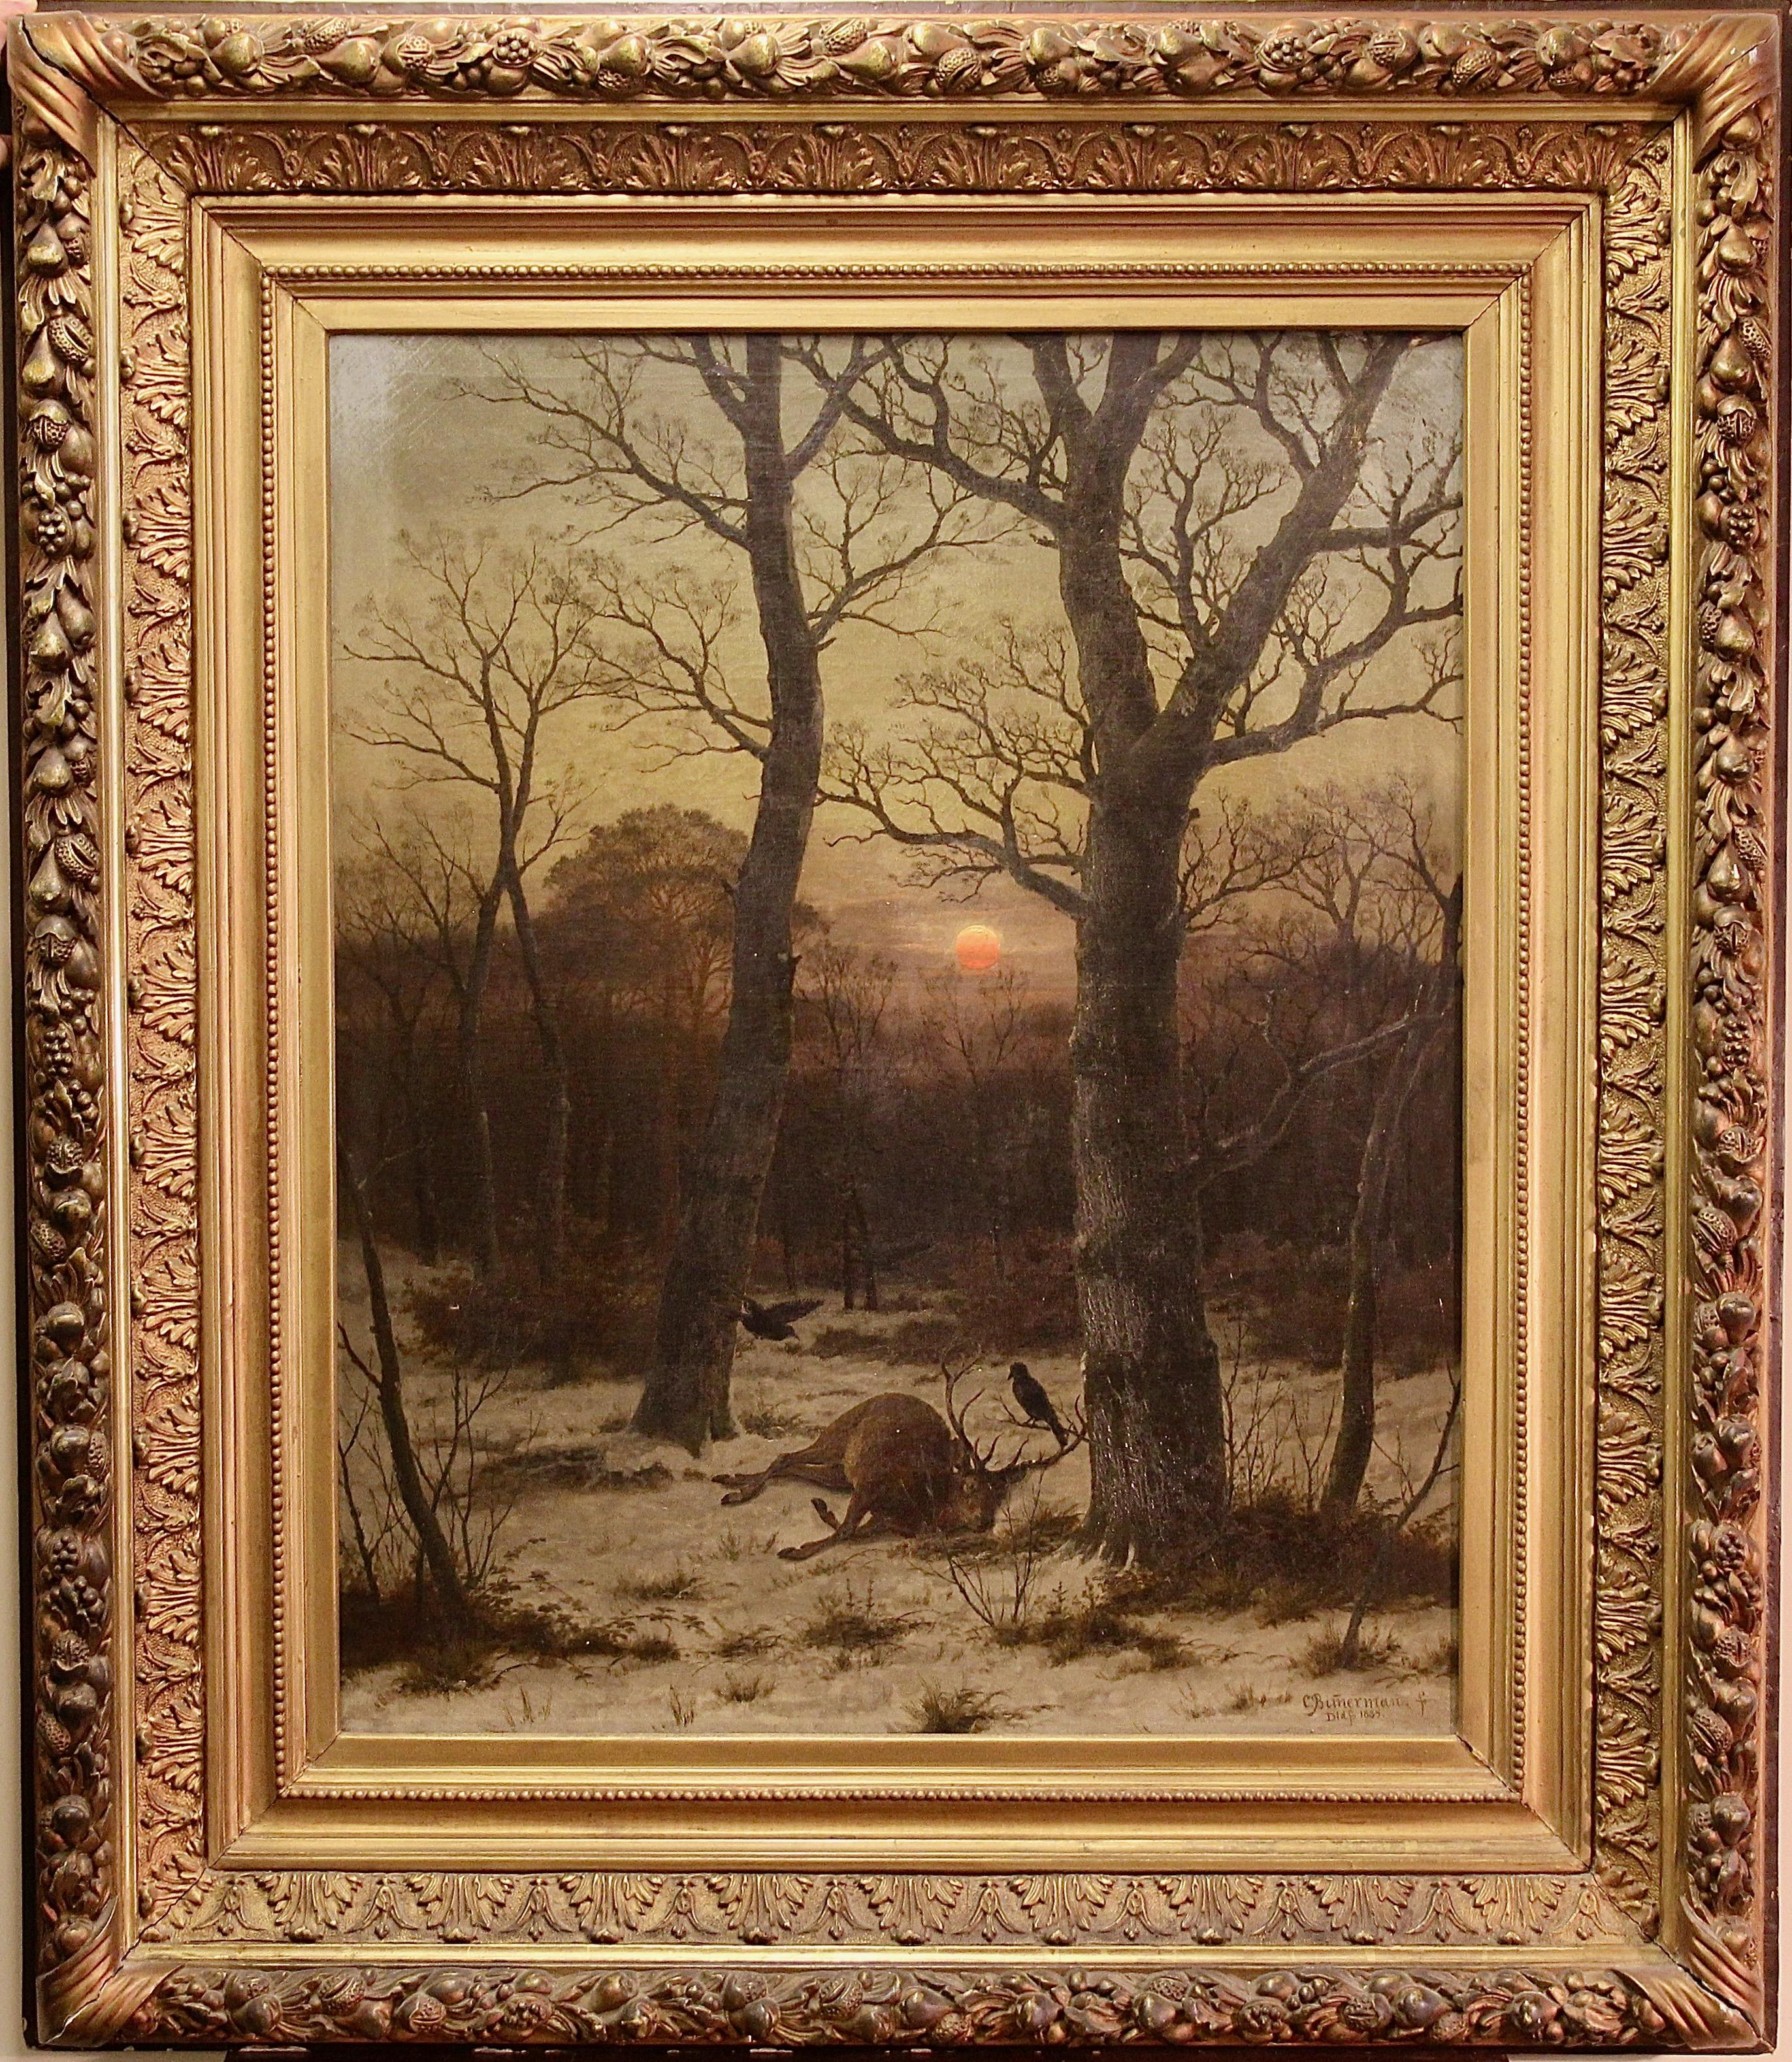 Animal Painting Peter Franz Caesar Bimmermann - Peinture à l'huile, Caeser Bimmermann, 1885. Paysage d'hiver en neige avec cerfs.